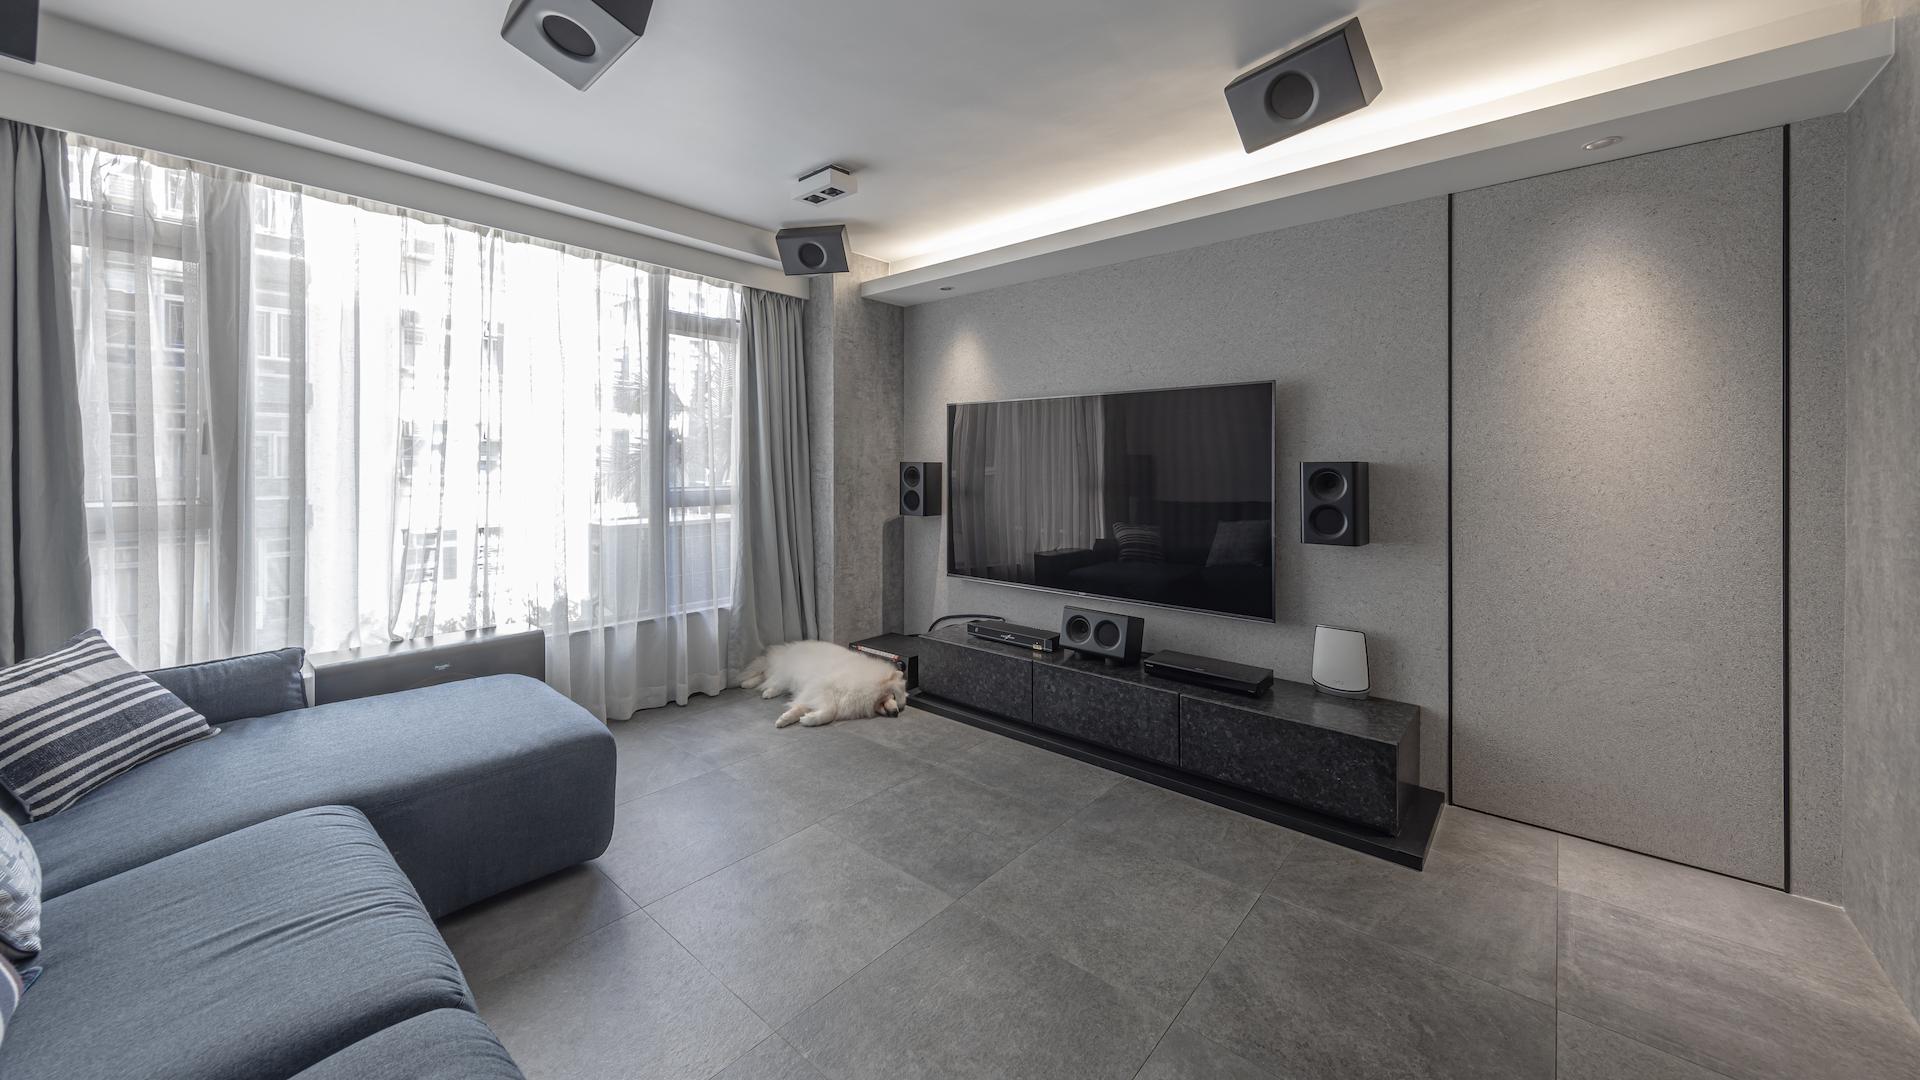 VirtuouS Interiors Crafts a Stylish Hong Kong Abode with Shades of Grey